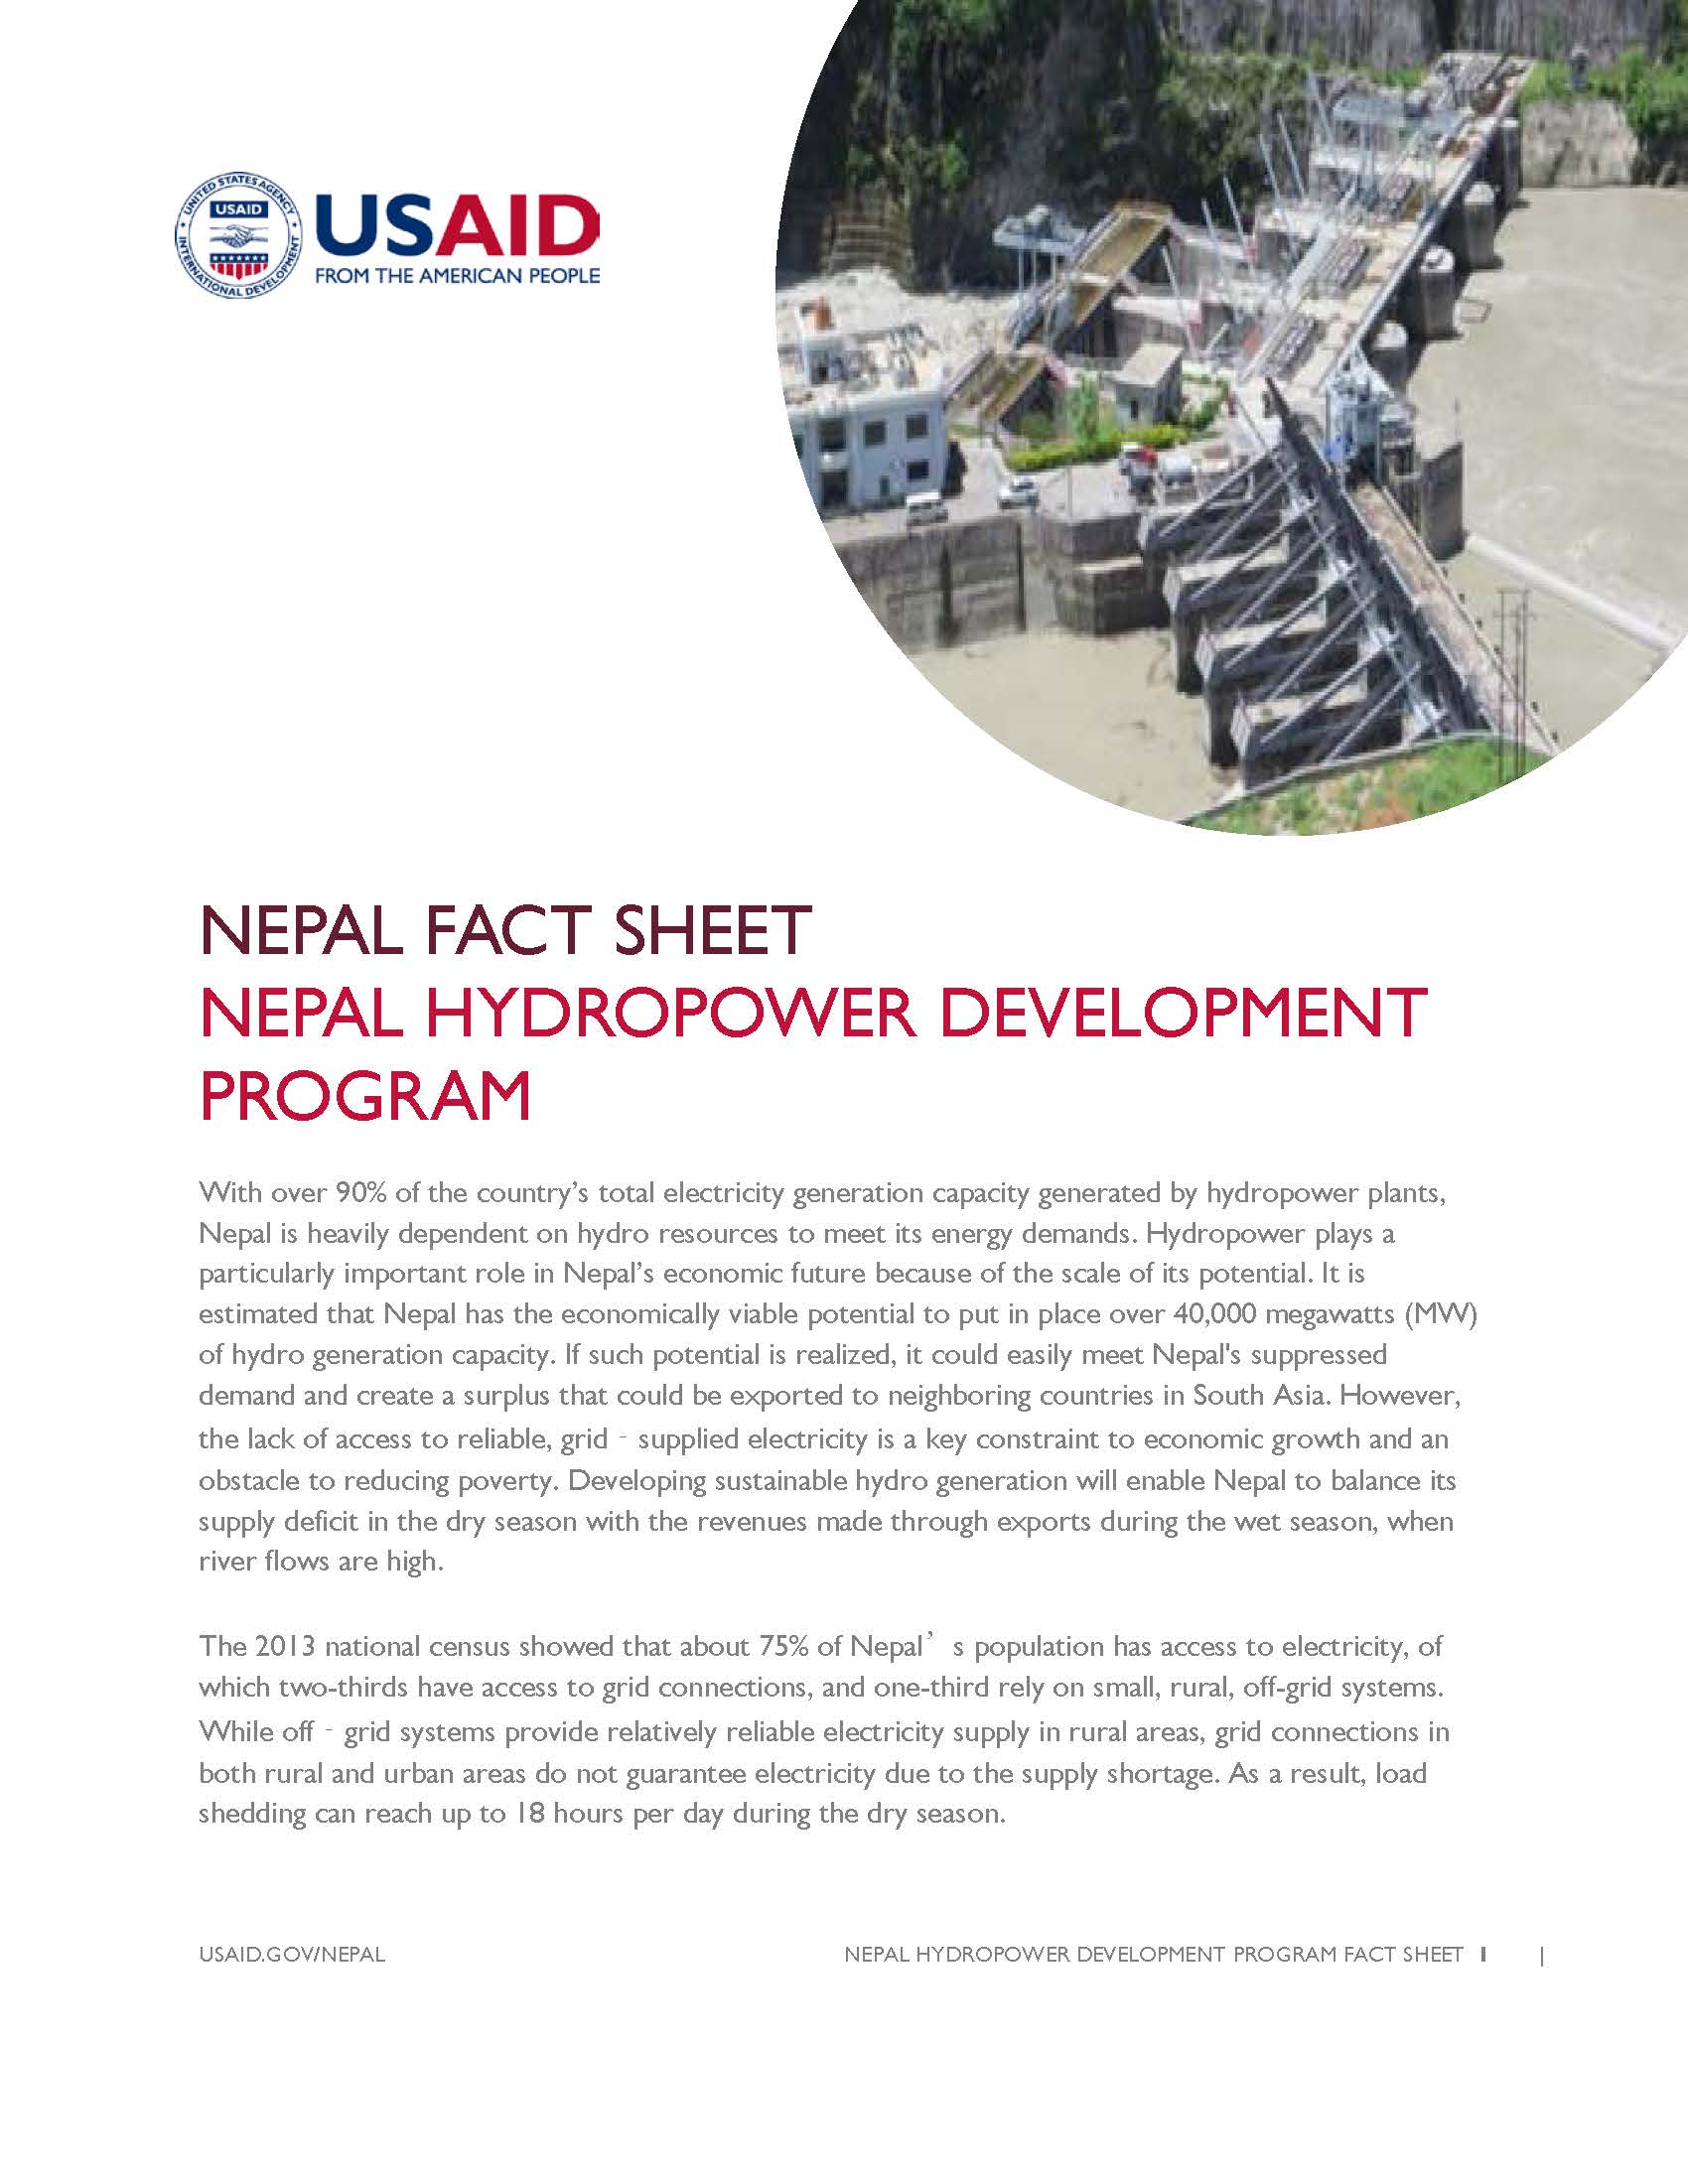 FACTSHEET: NEPAL HYDROPOWER DEVELOPMENT PROGRAM